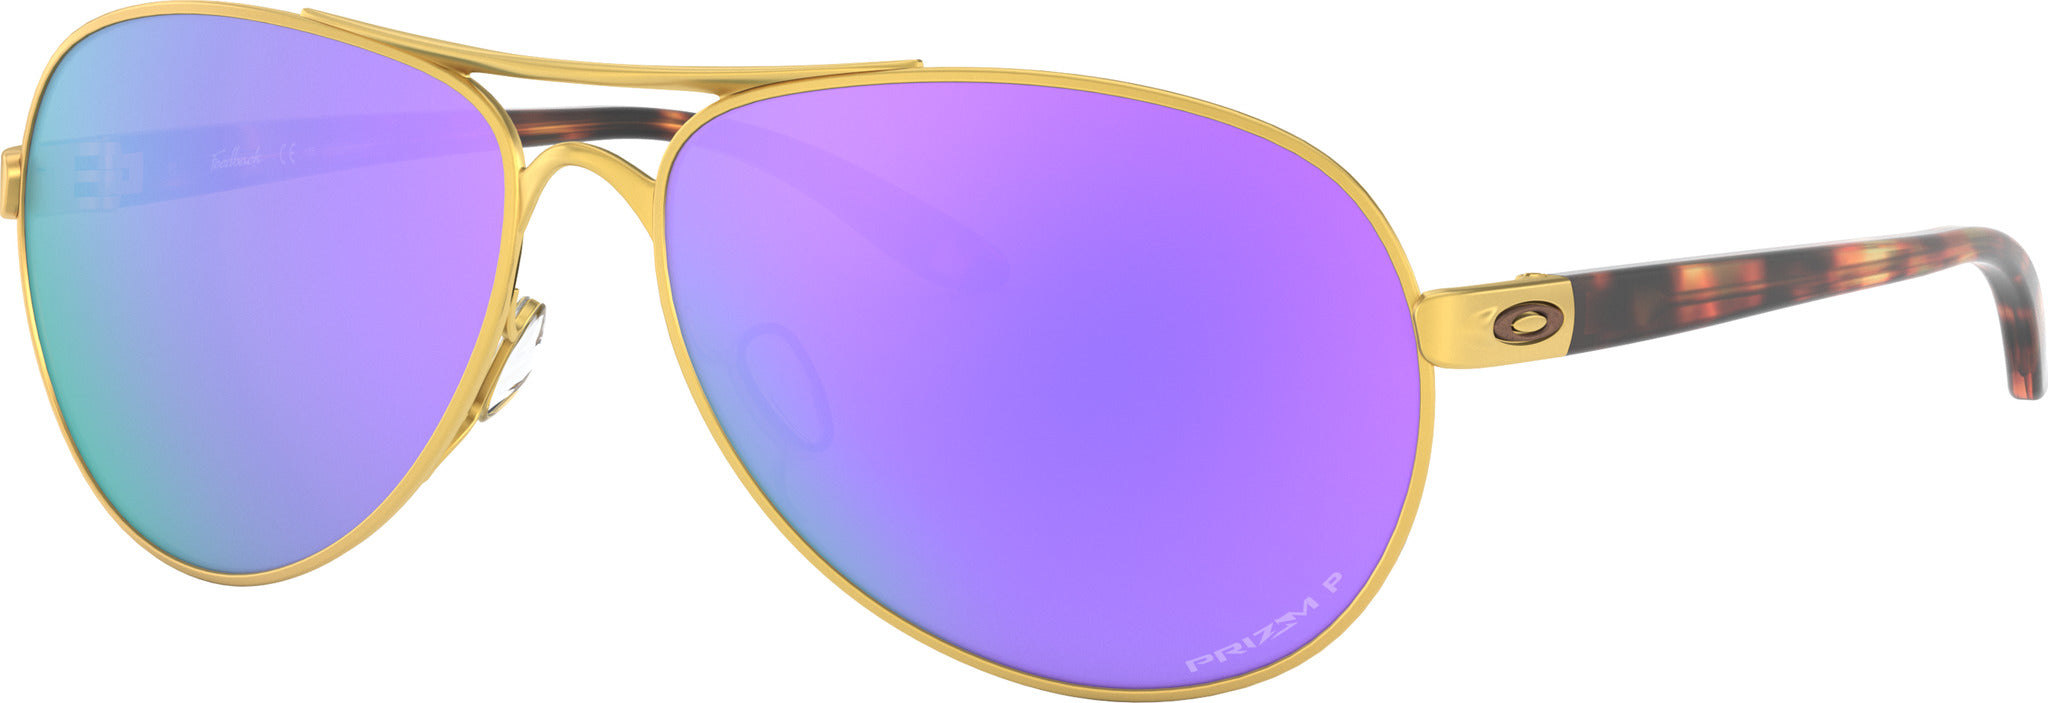 Oakley Feedback Sunglasses - Satin Gold - Prizm Violet Iridium Polarized  Lens | Altitude Sports